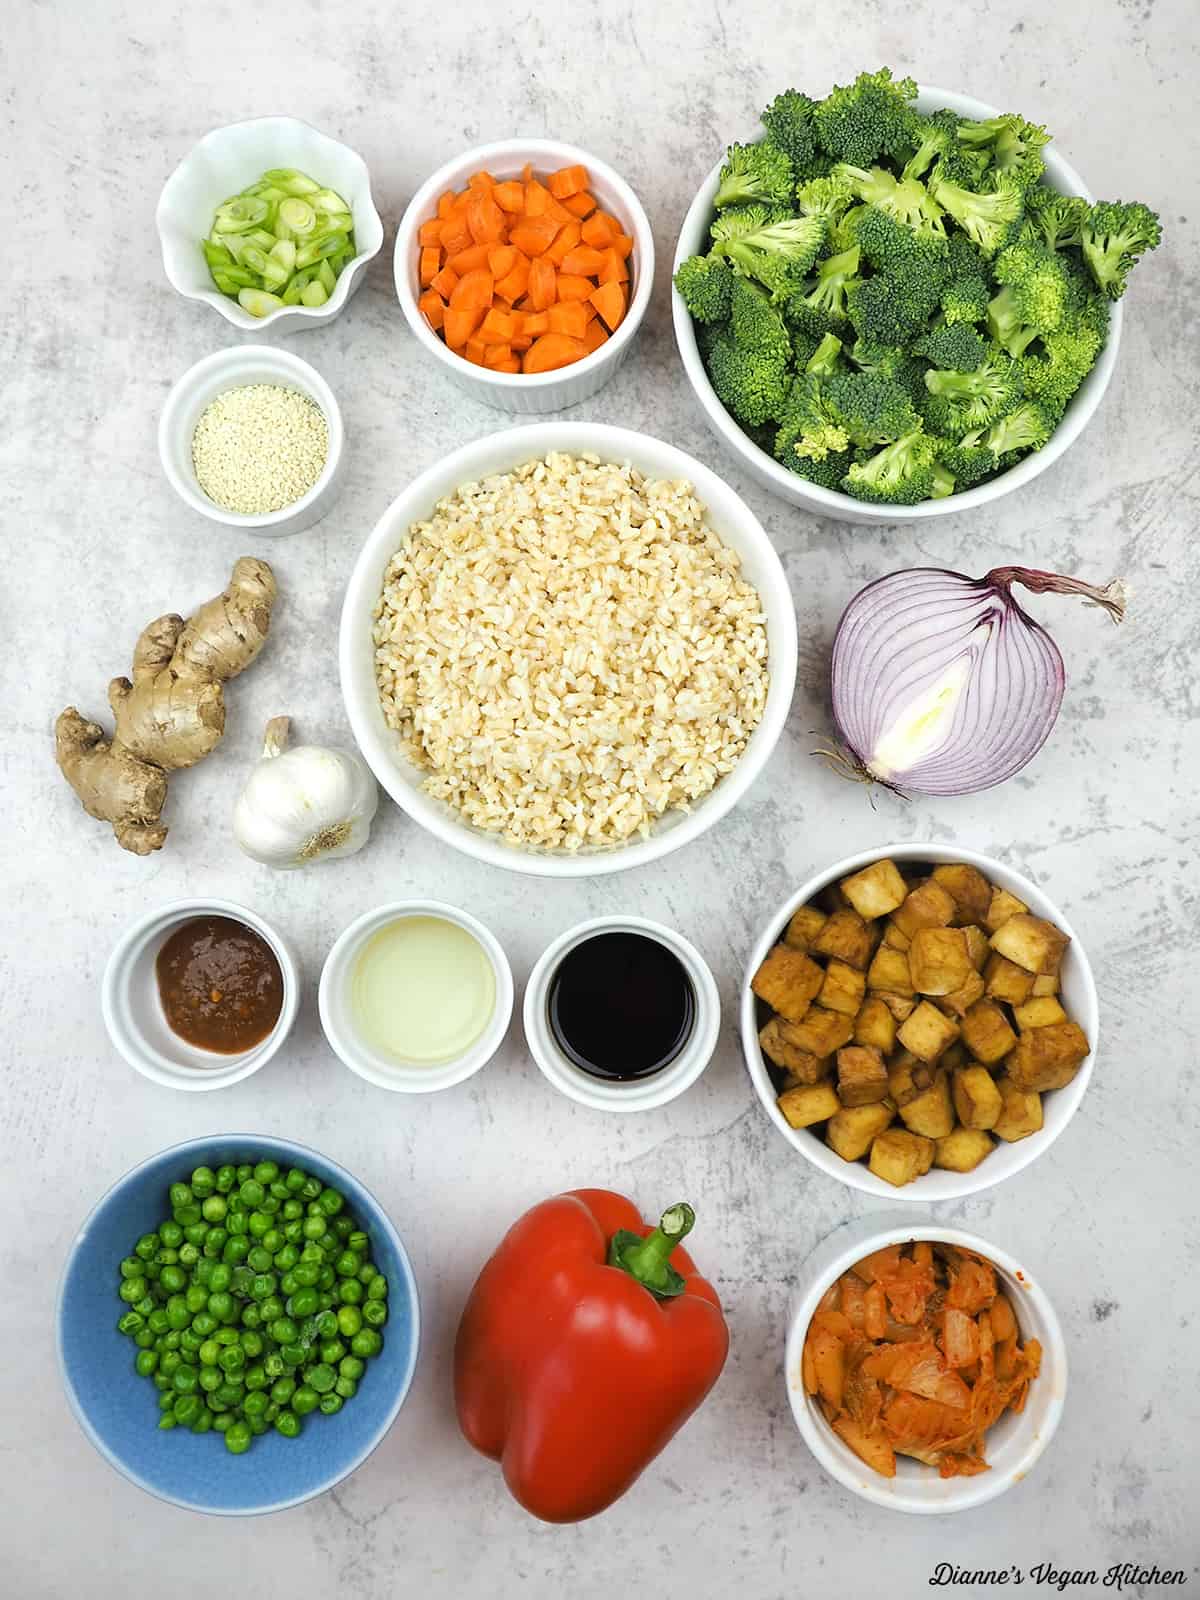 scallions, carrots, broccoli, rice, vinegar, garlic, ginger, onion, tofu, kimchi, bell pepper, green peas, garlic chili paste, tamari, sesame seeds